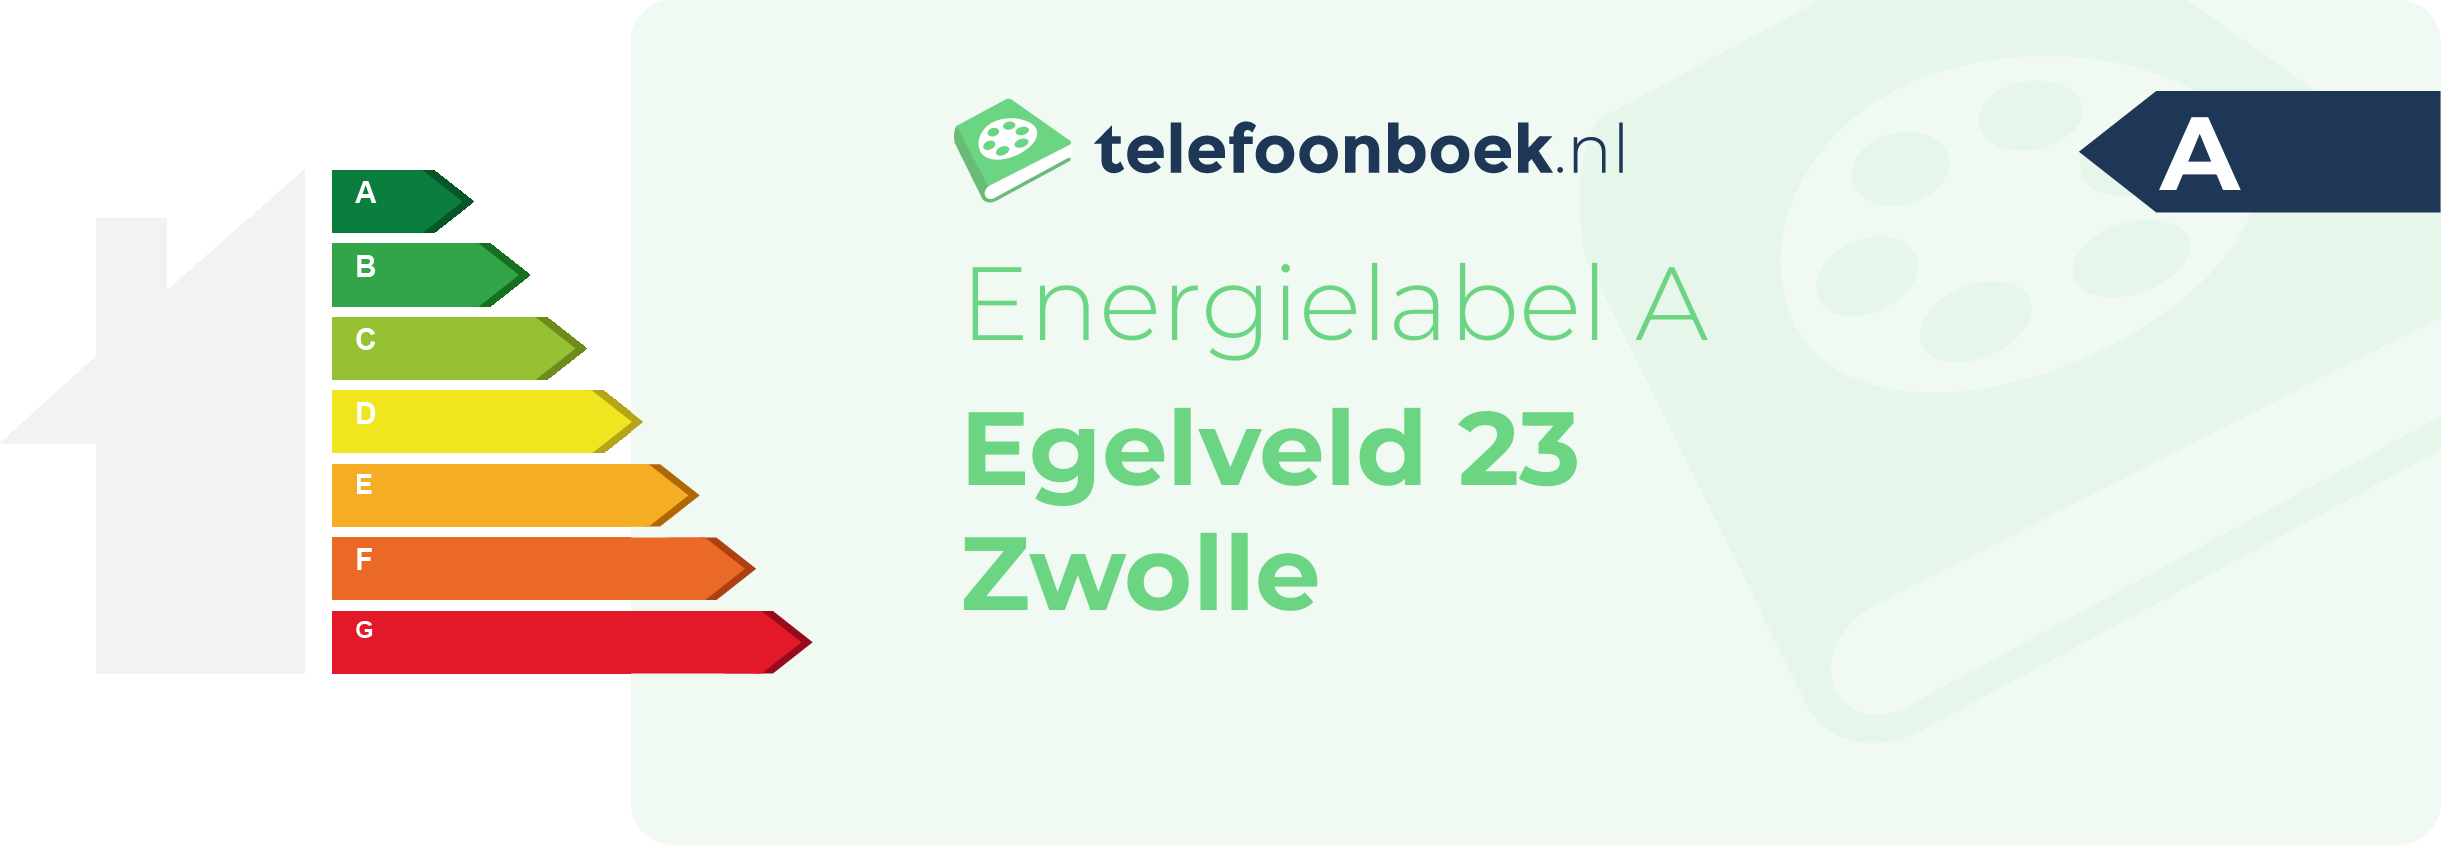 Energielabel Egelveld 23 Zwolle